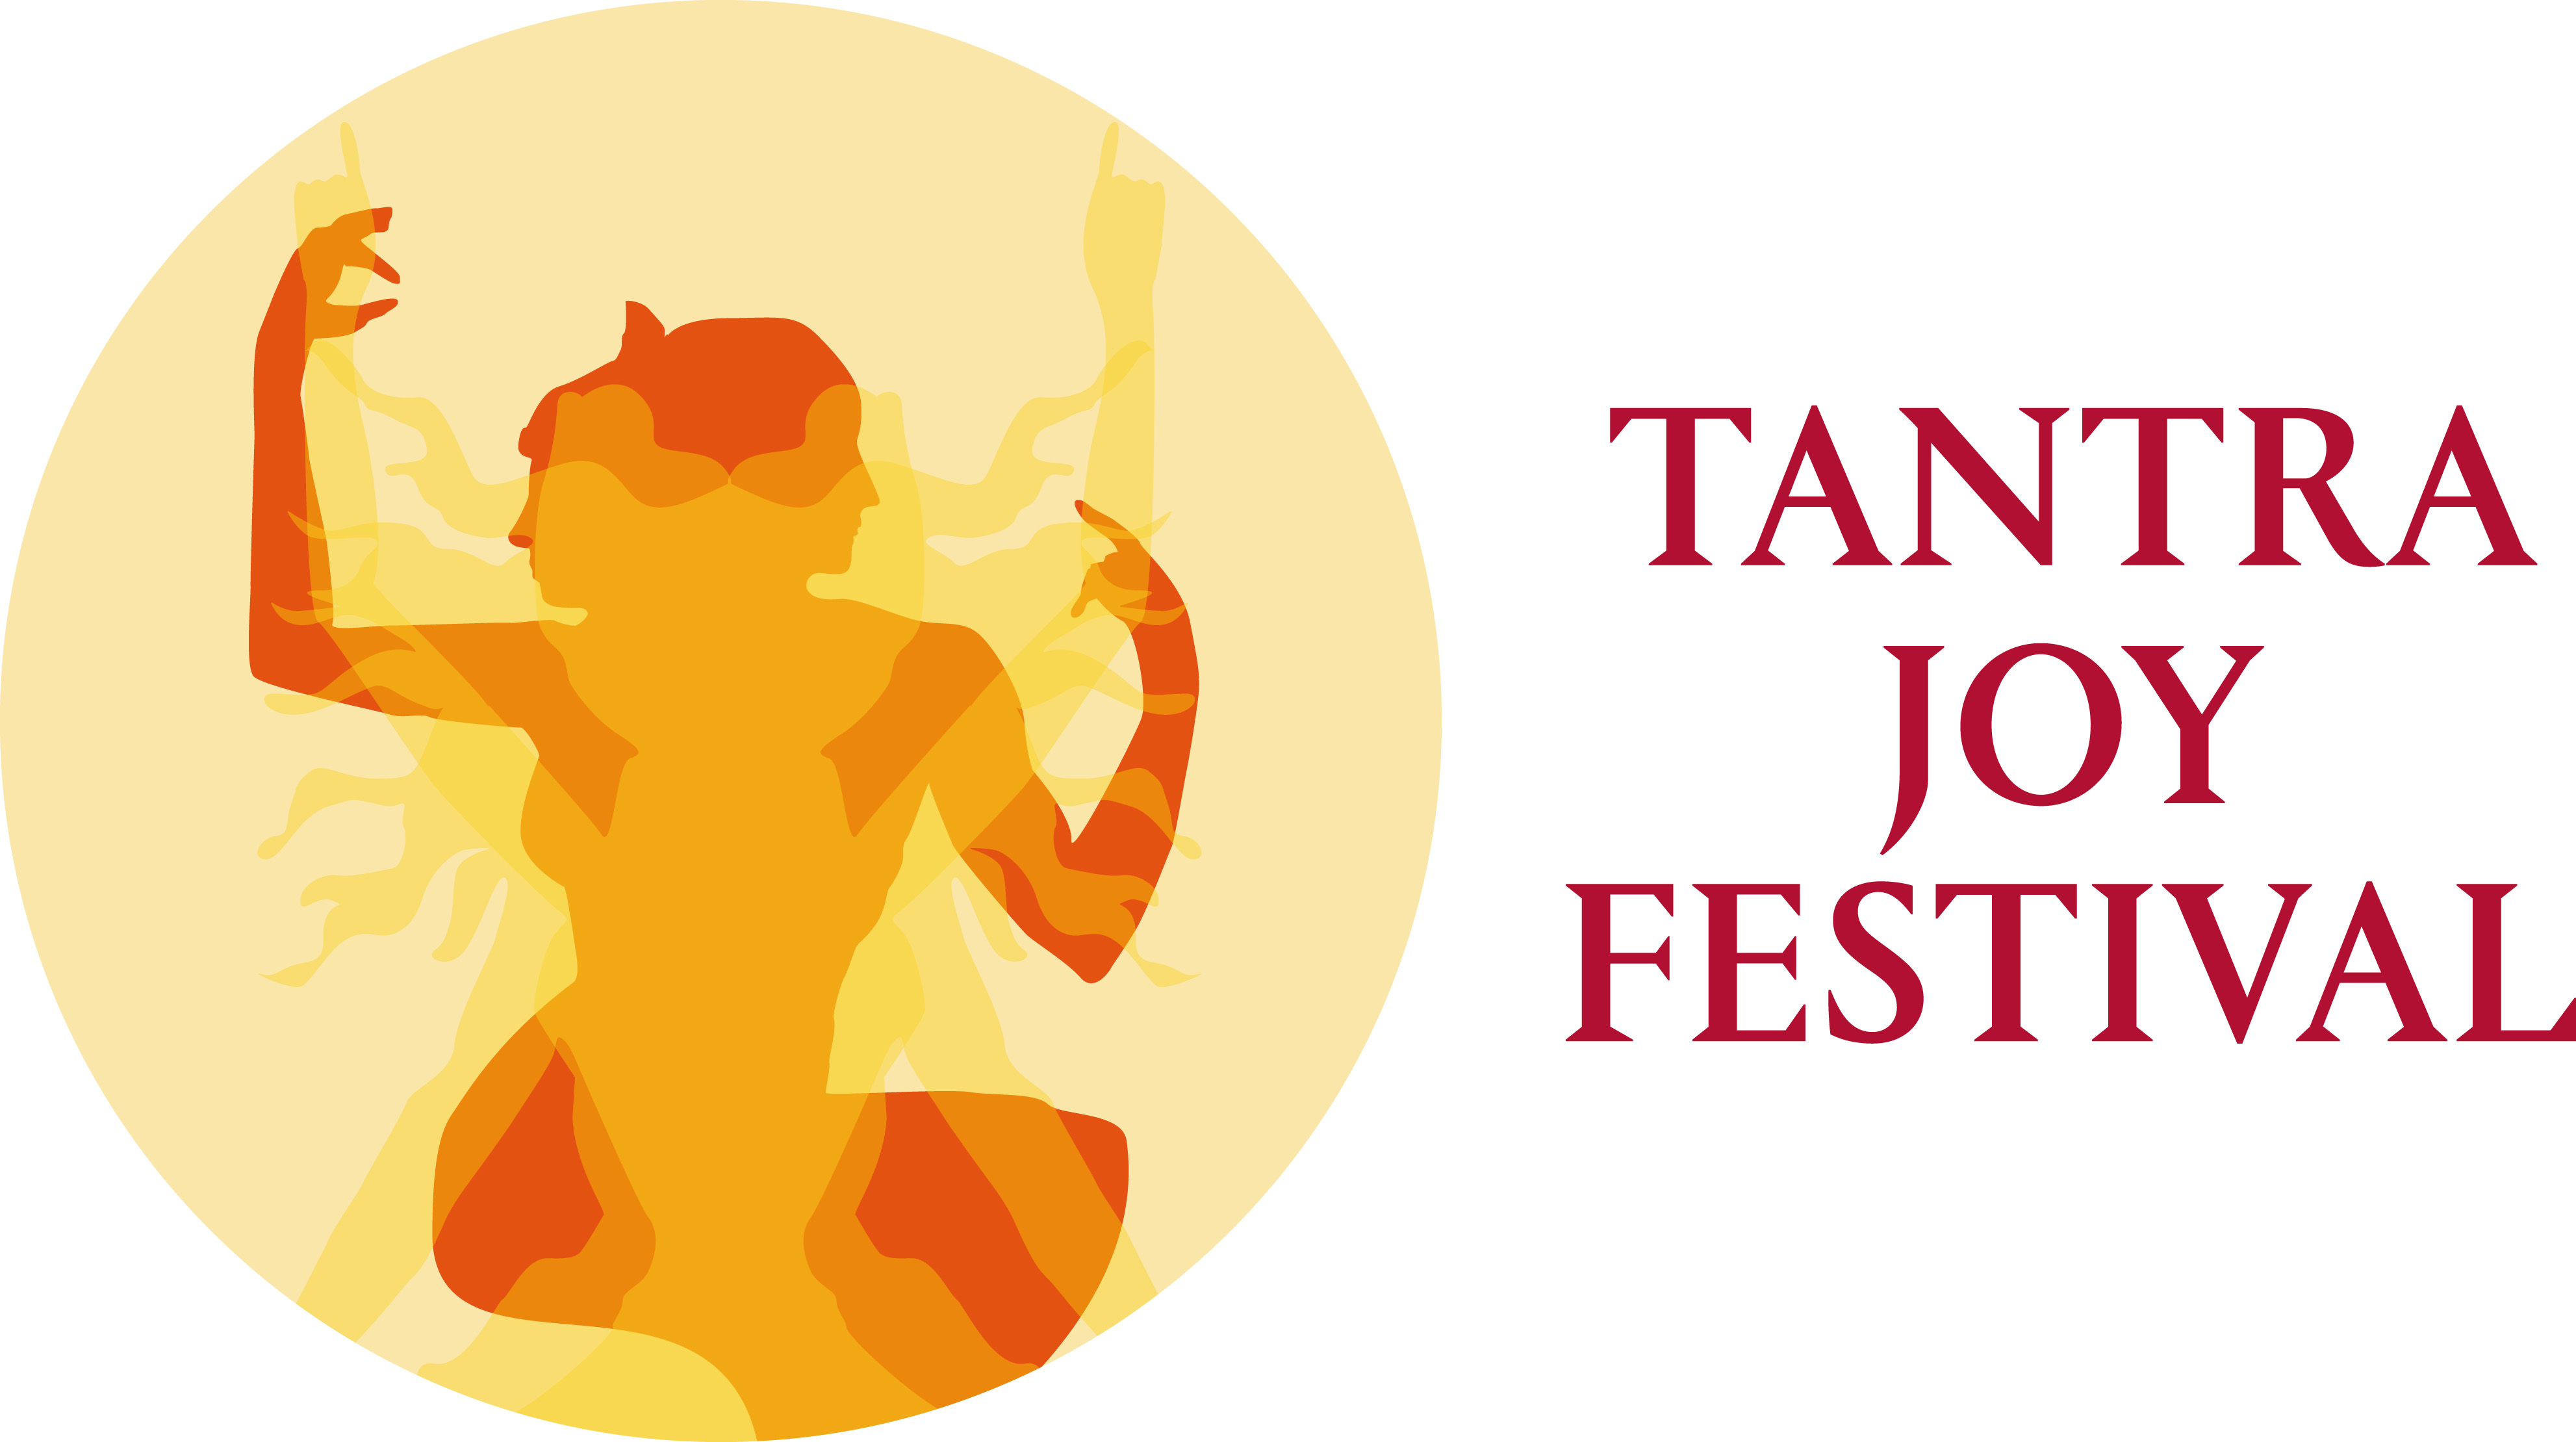 Tantra Joy Festival